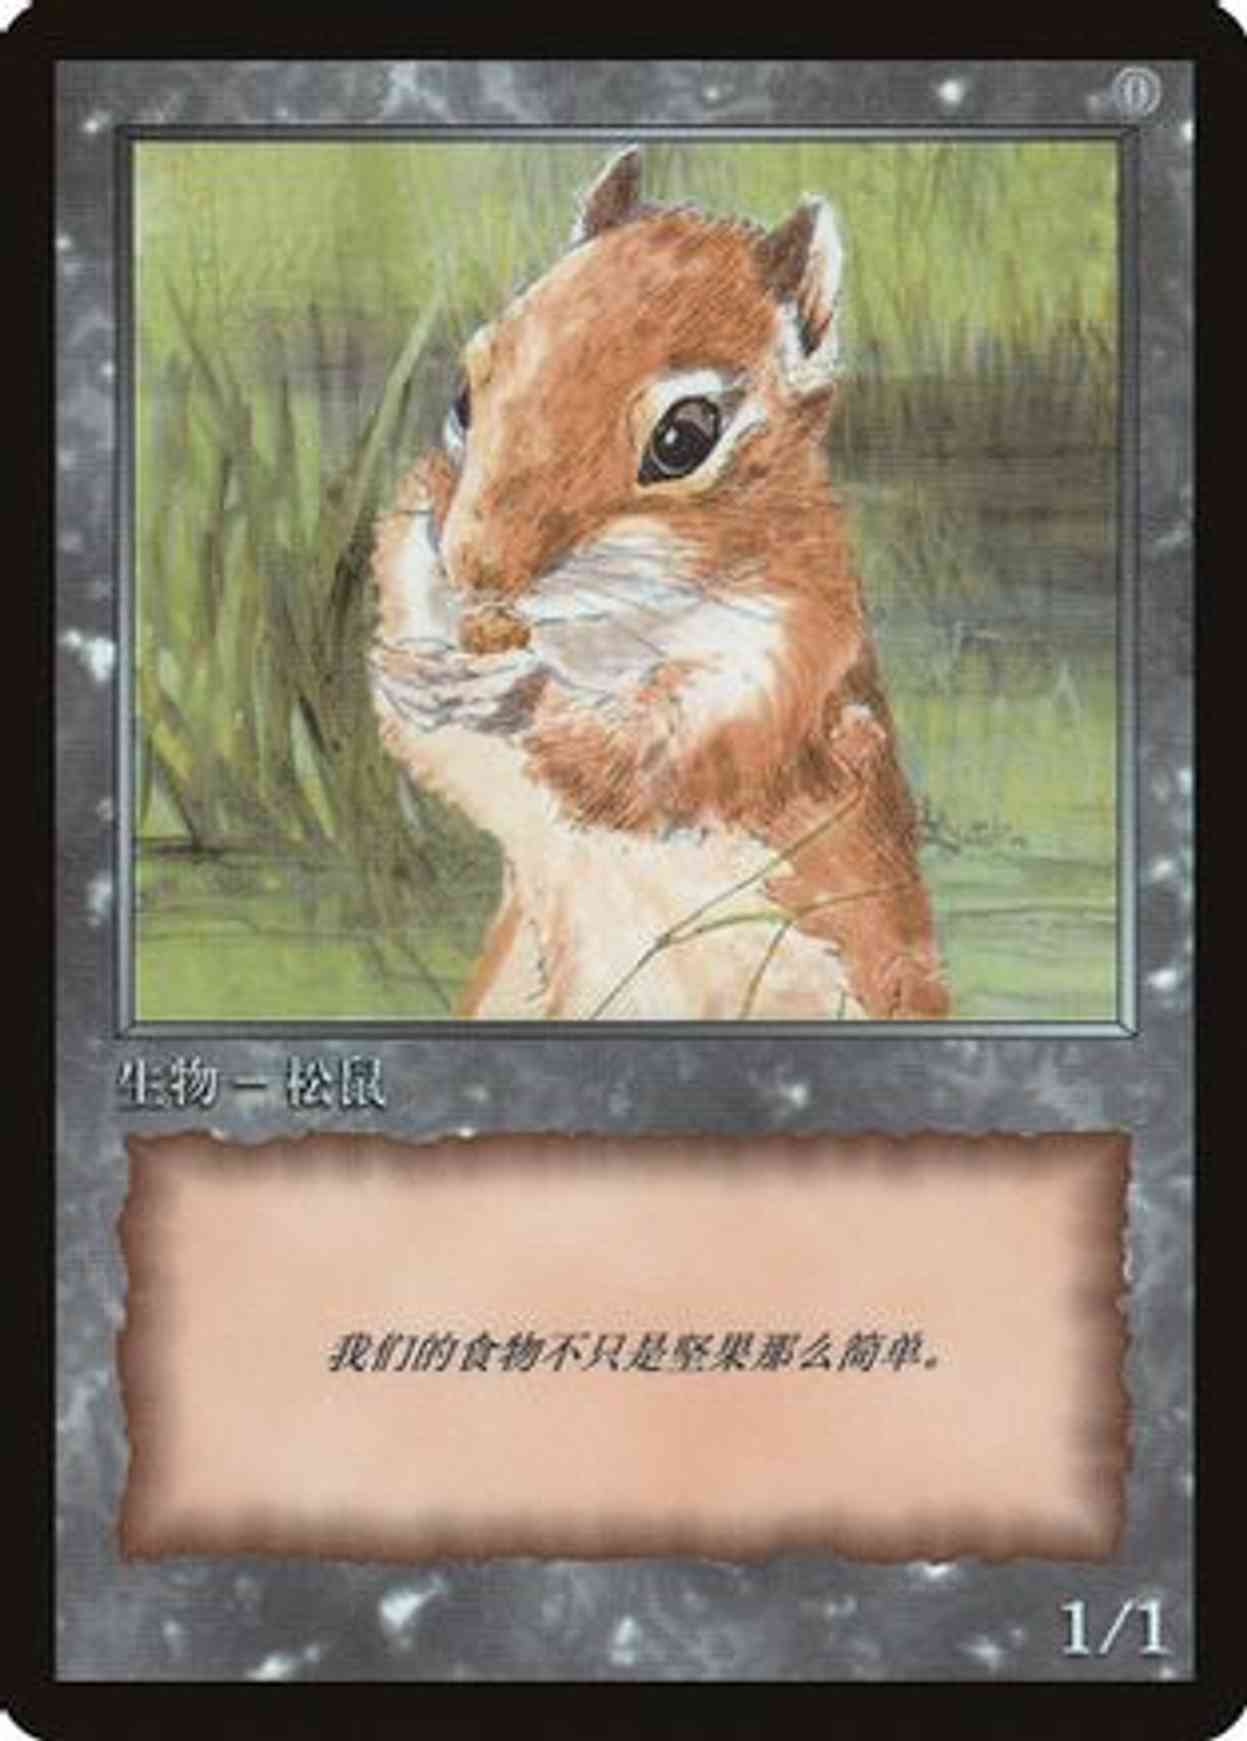 Squirrel Token magic card front